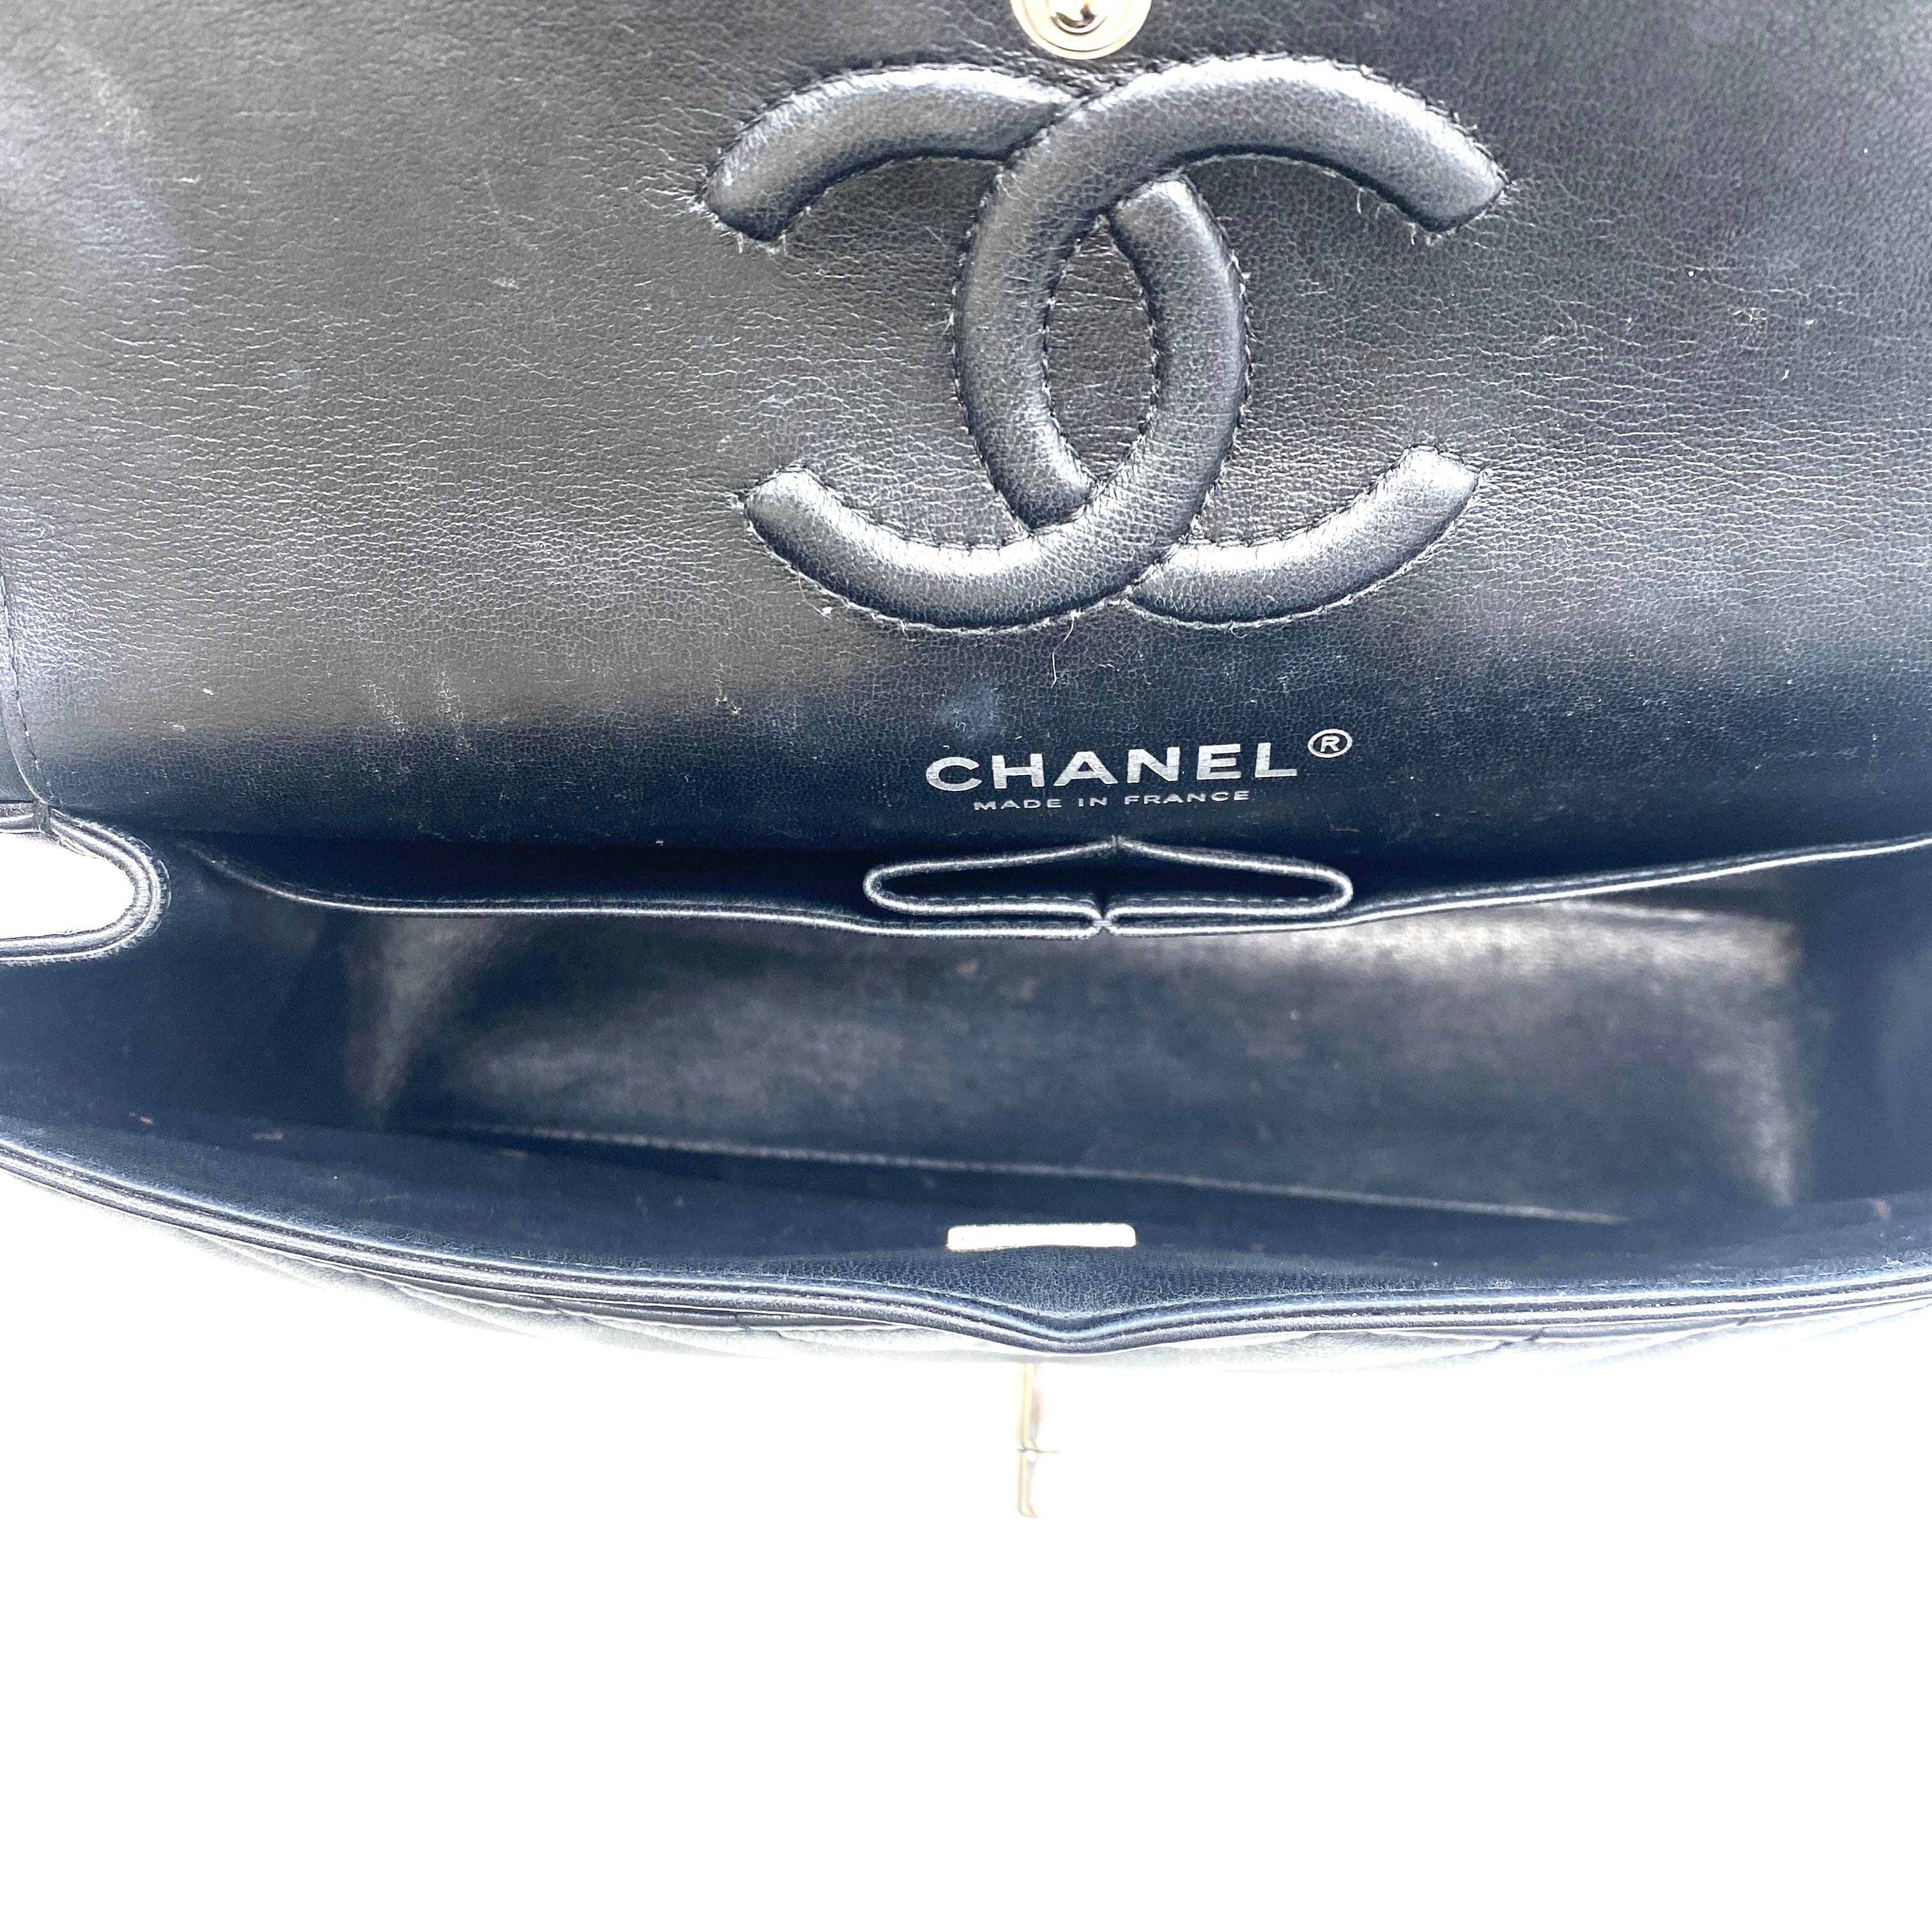 Bolsa Chanel Clásica Chica